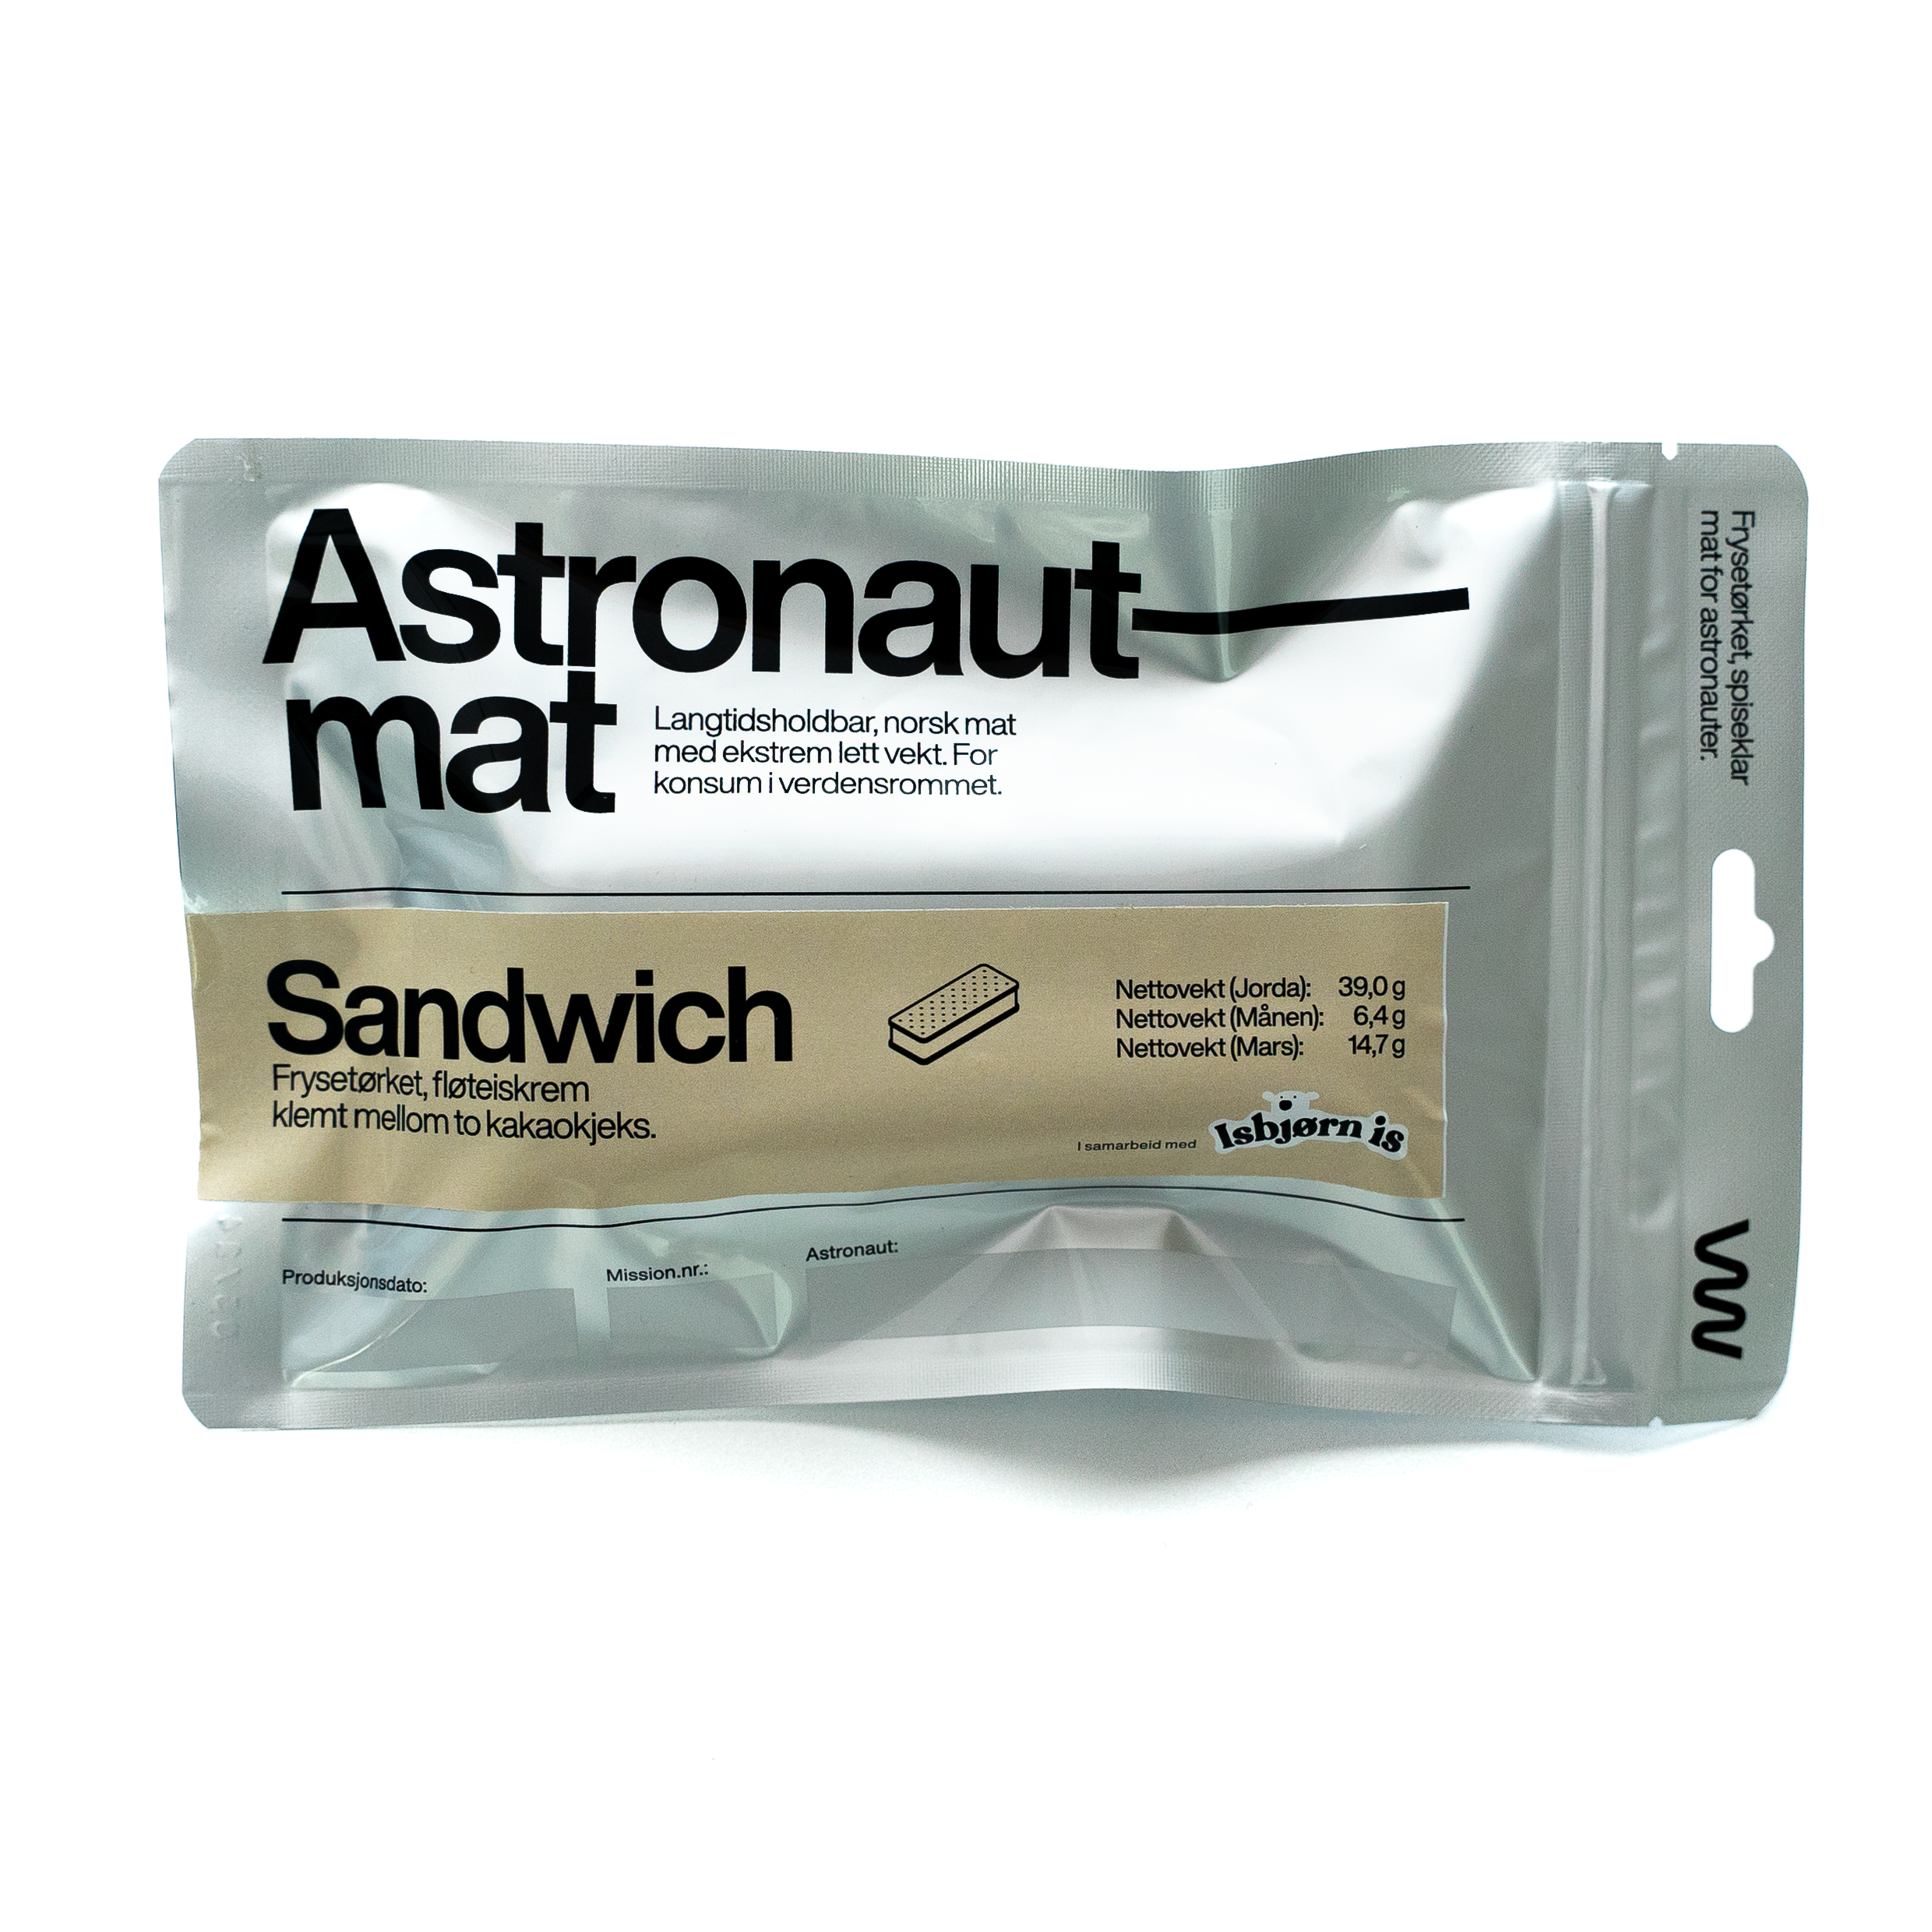 Astronaut-is